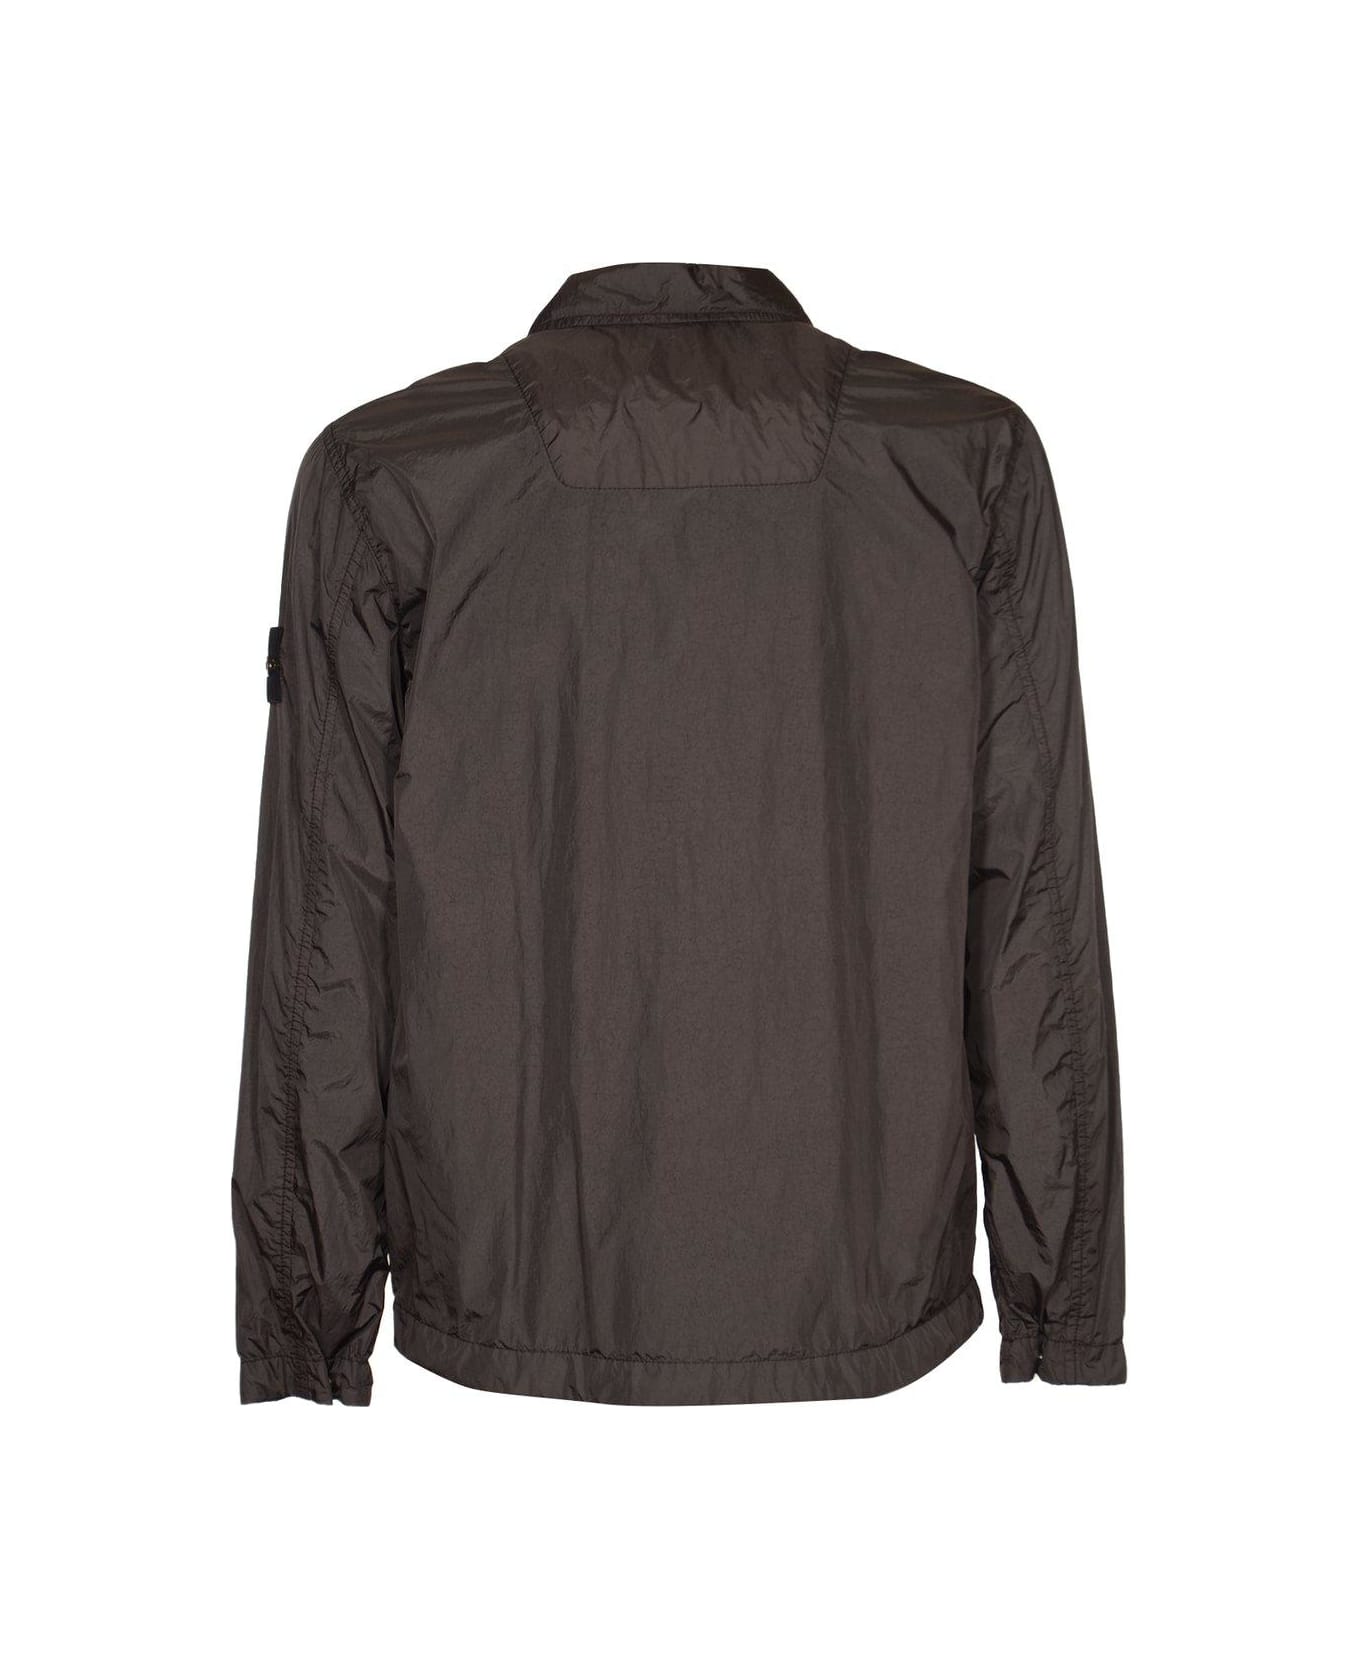 Stone Island Crinkle Reps Zipped Shirt Jacket - CHARCOAL